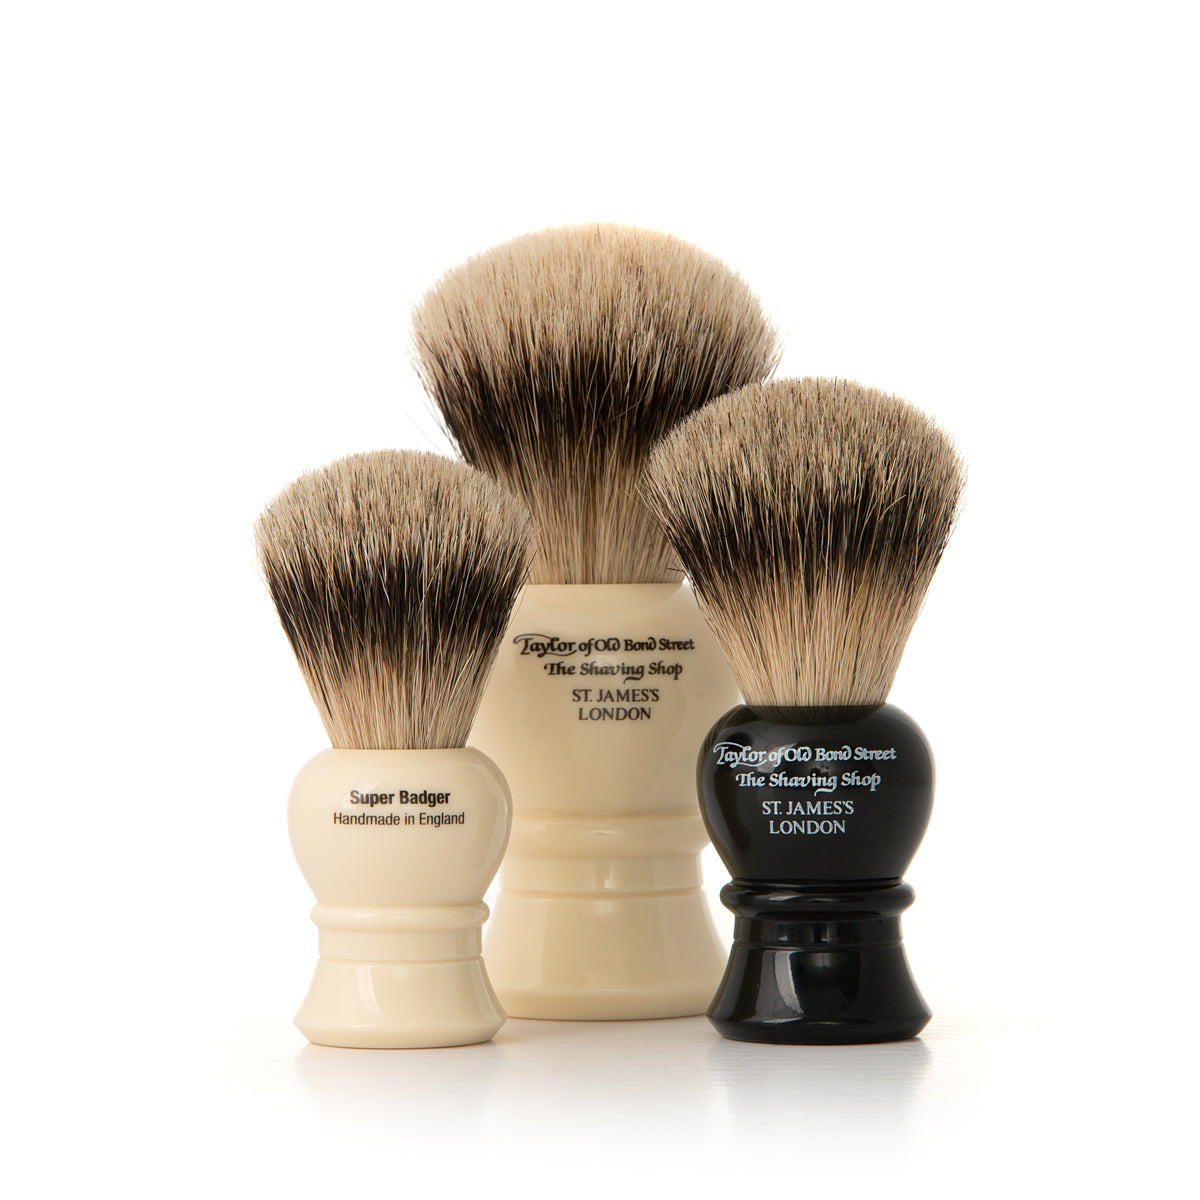 Natural badger brushes from Taylor of Old Bond Street | All natural shaving brushes for men. 